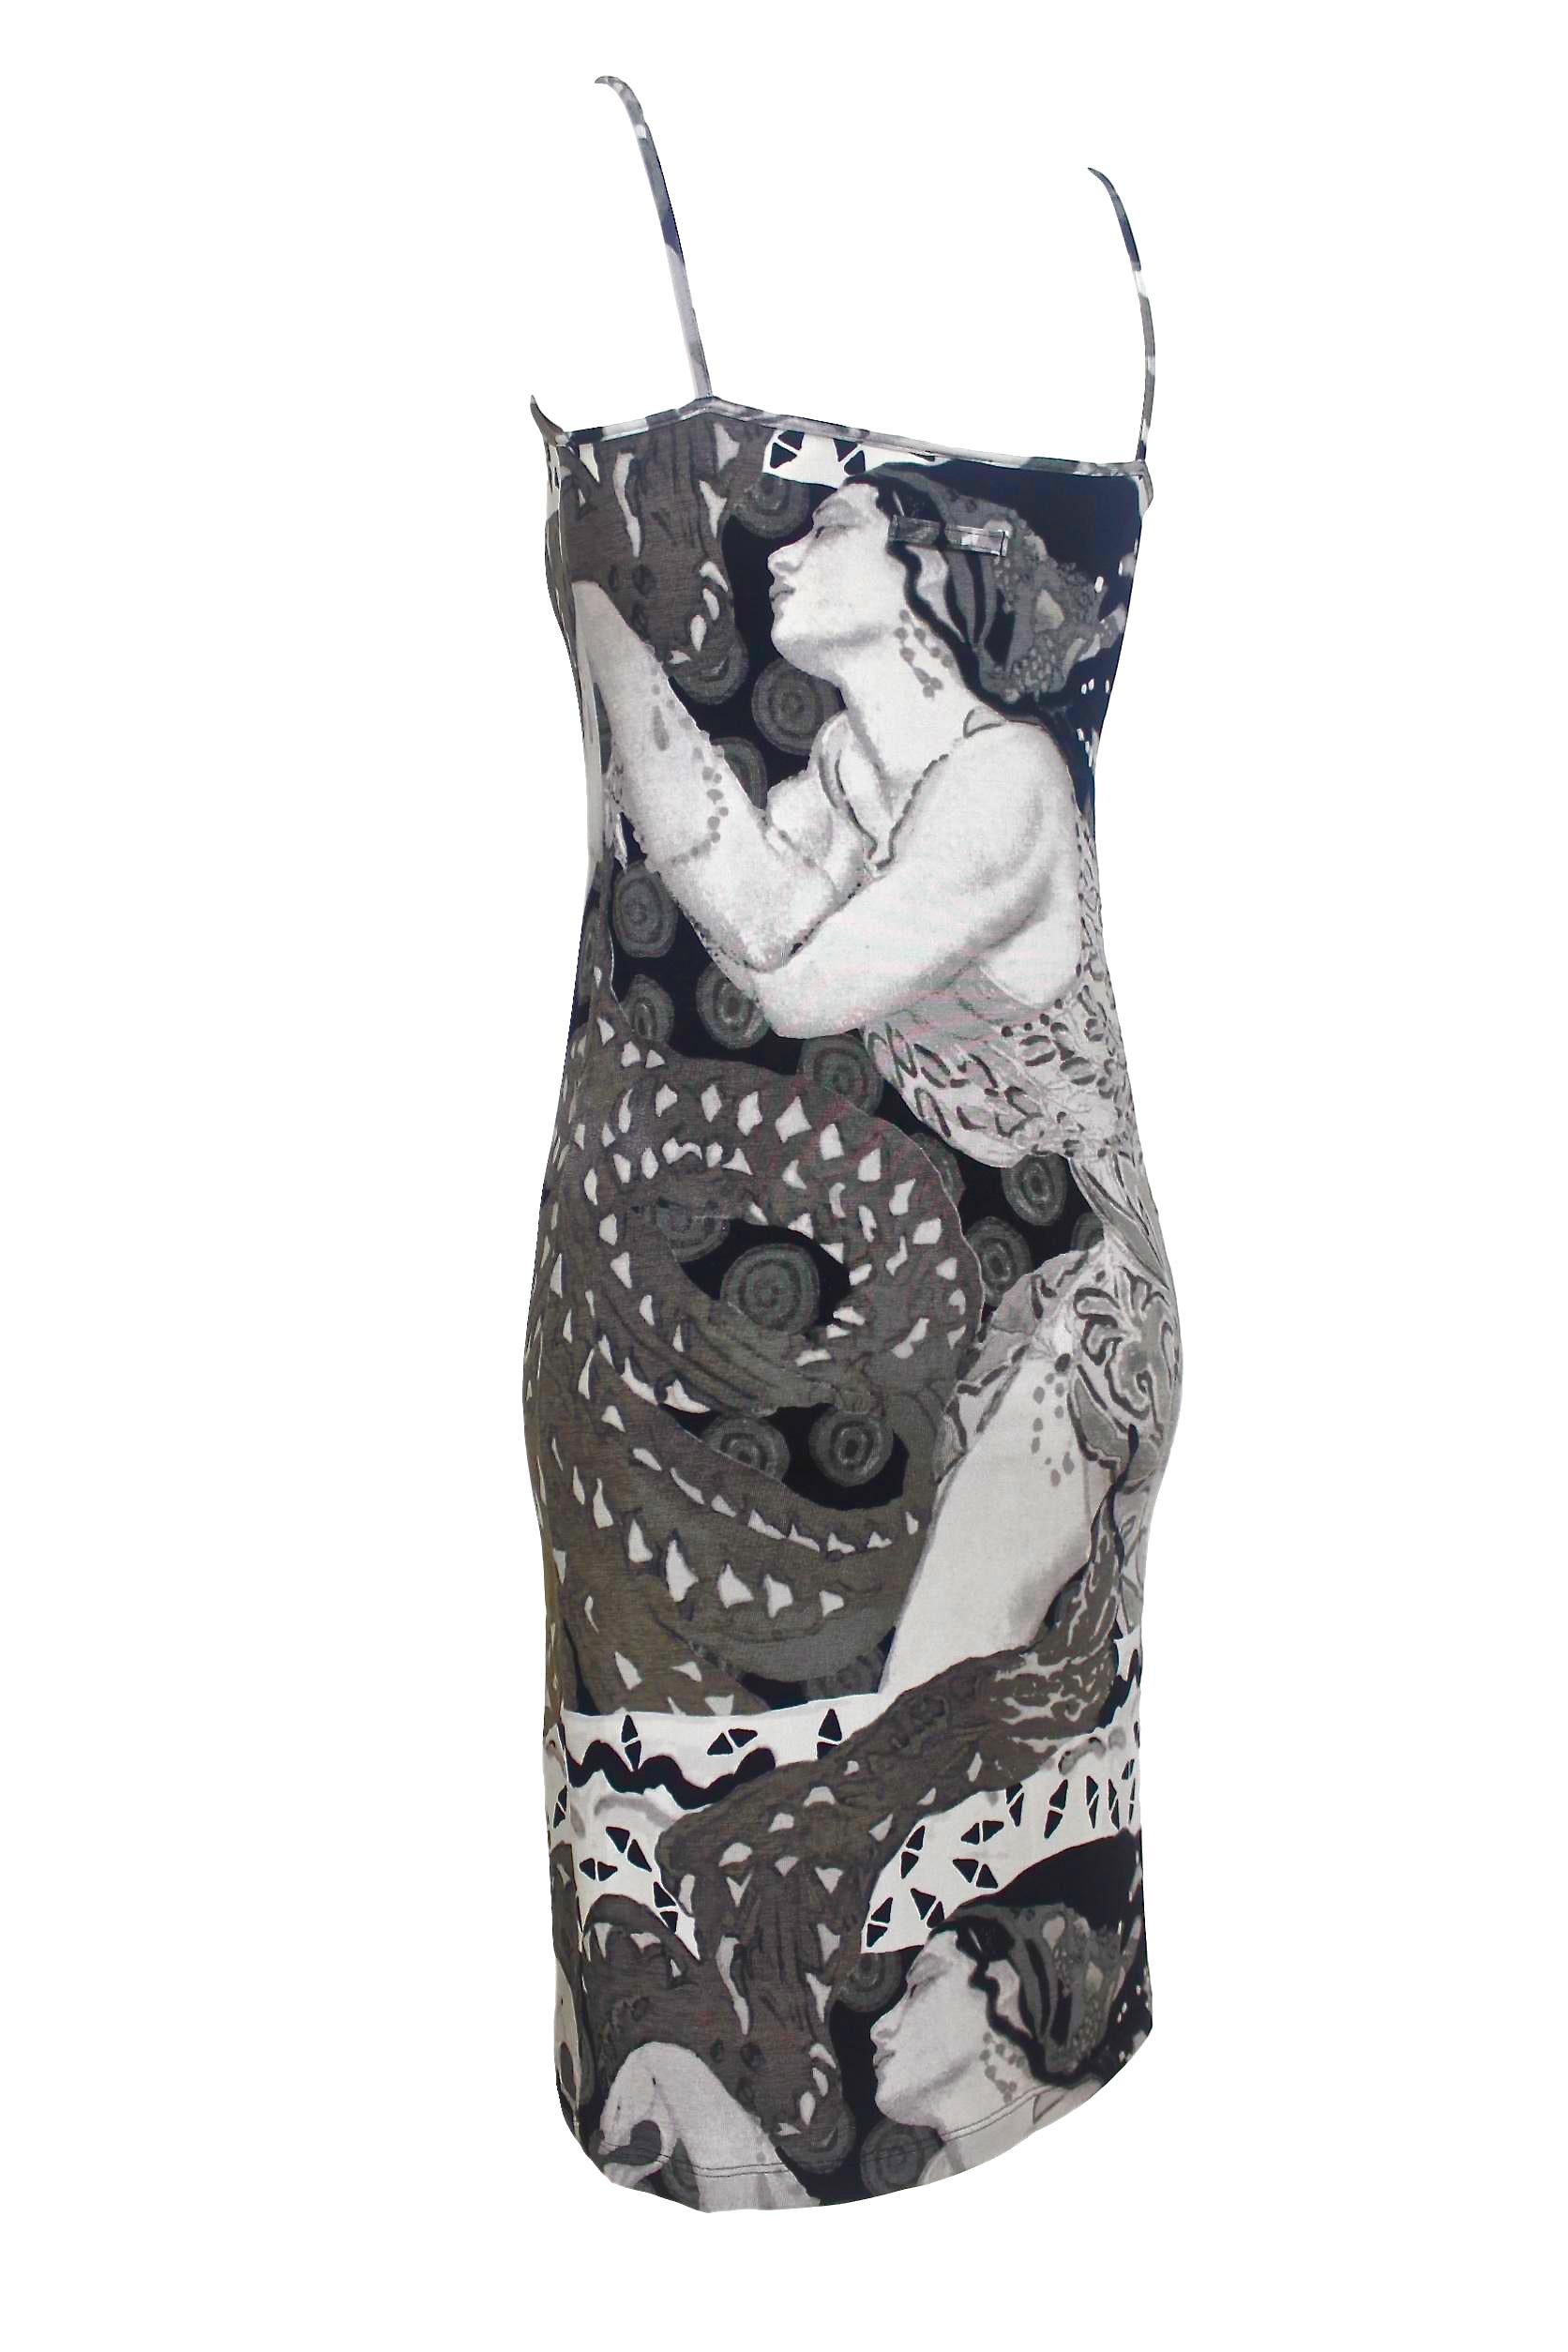 Jean paul Gaultier 'Erte' Print Summer Slip Dress In Excellent Condition For Sale In Bath, GB